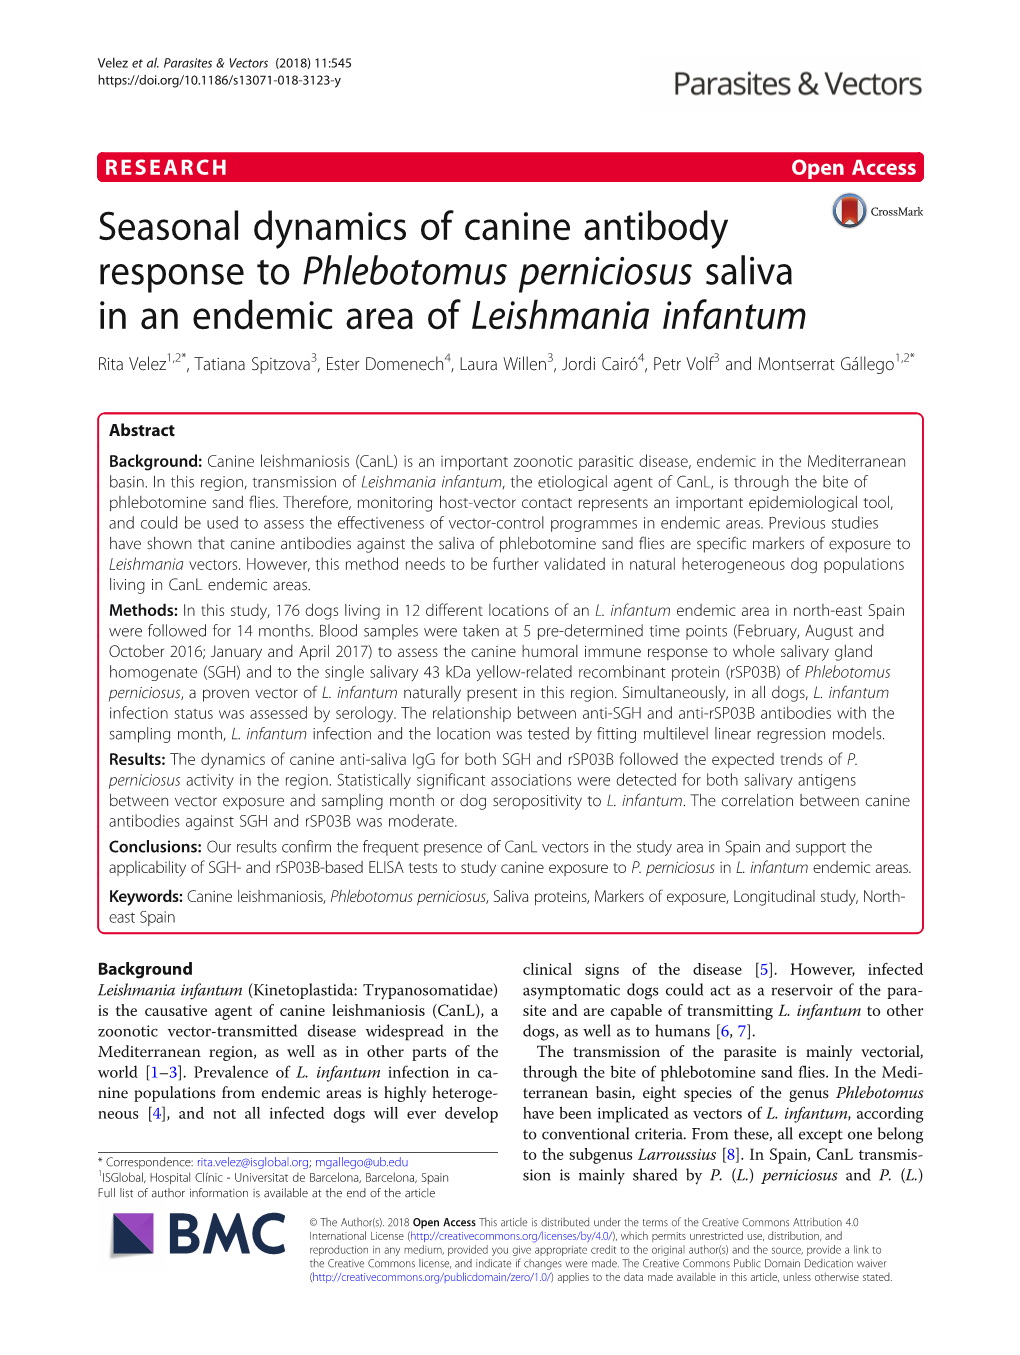 Seasonal Dynamics of Canine Antibody Response to Phlebotomus